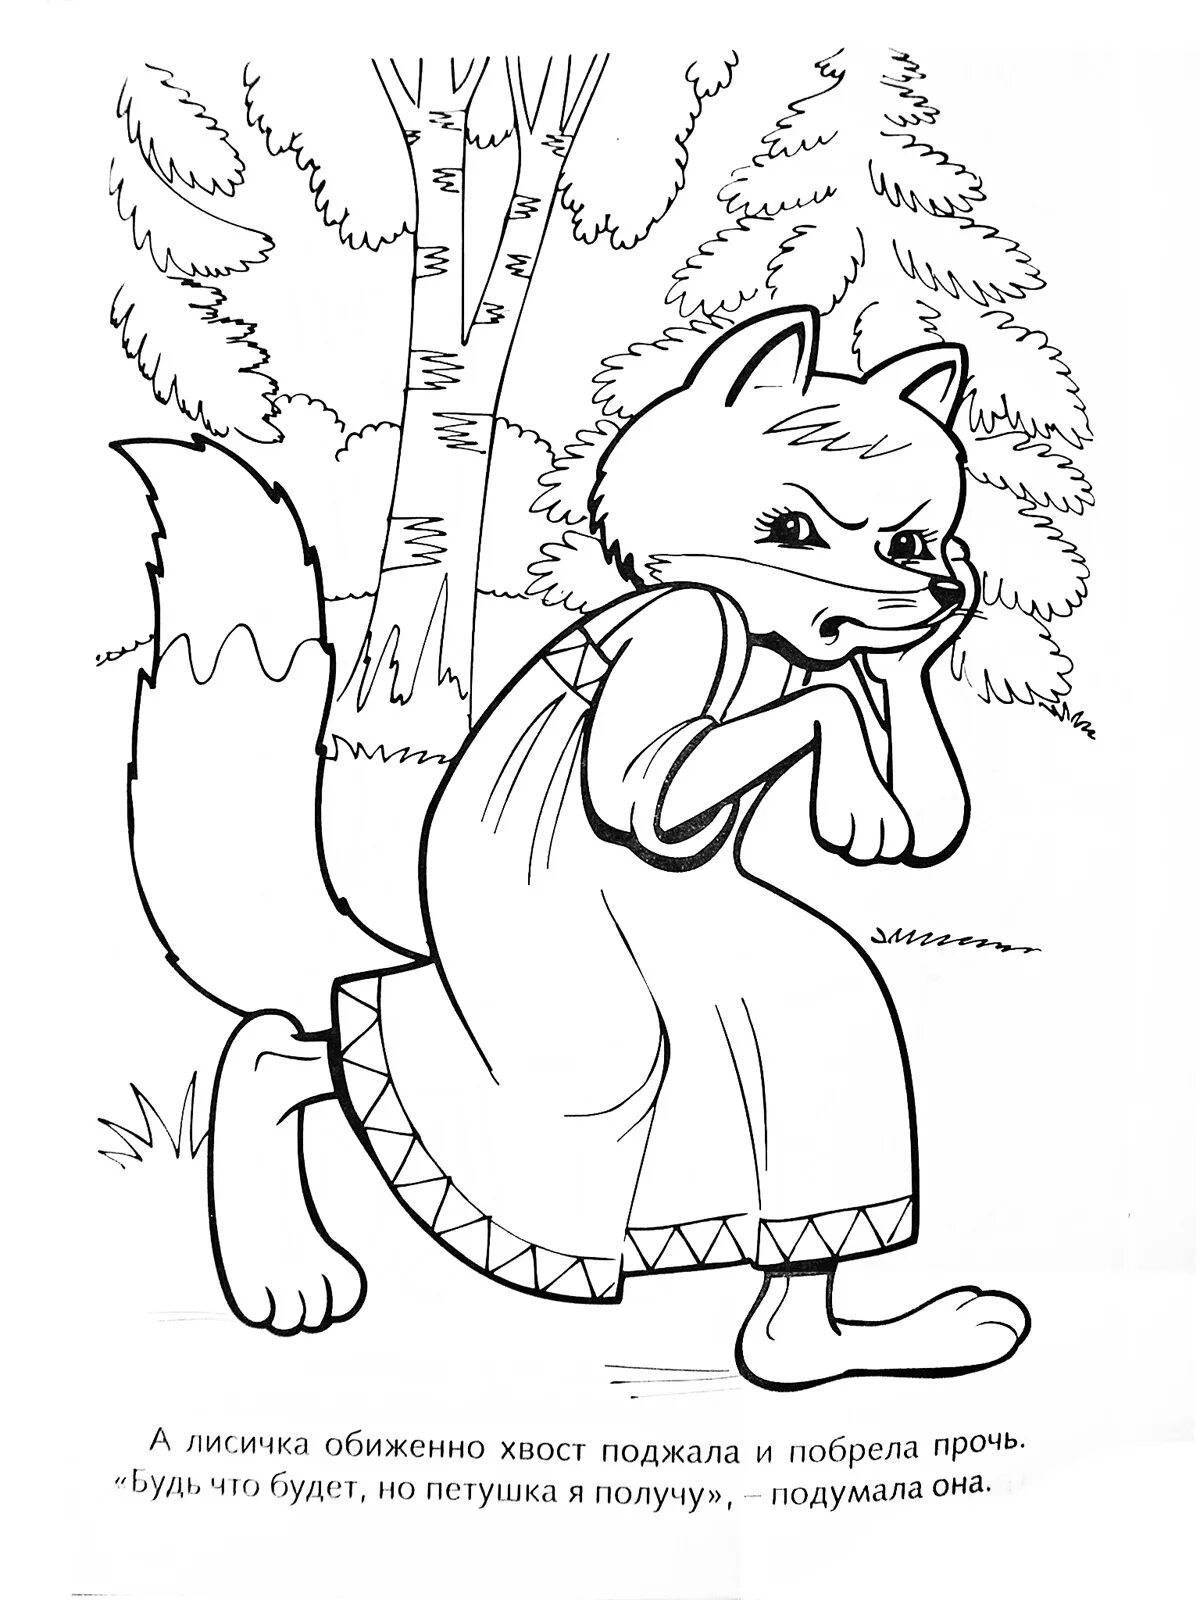 Fun coloring snowman and fox